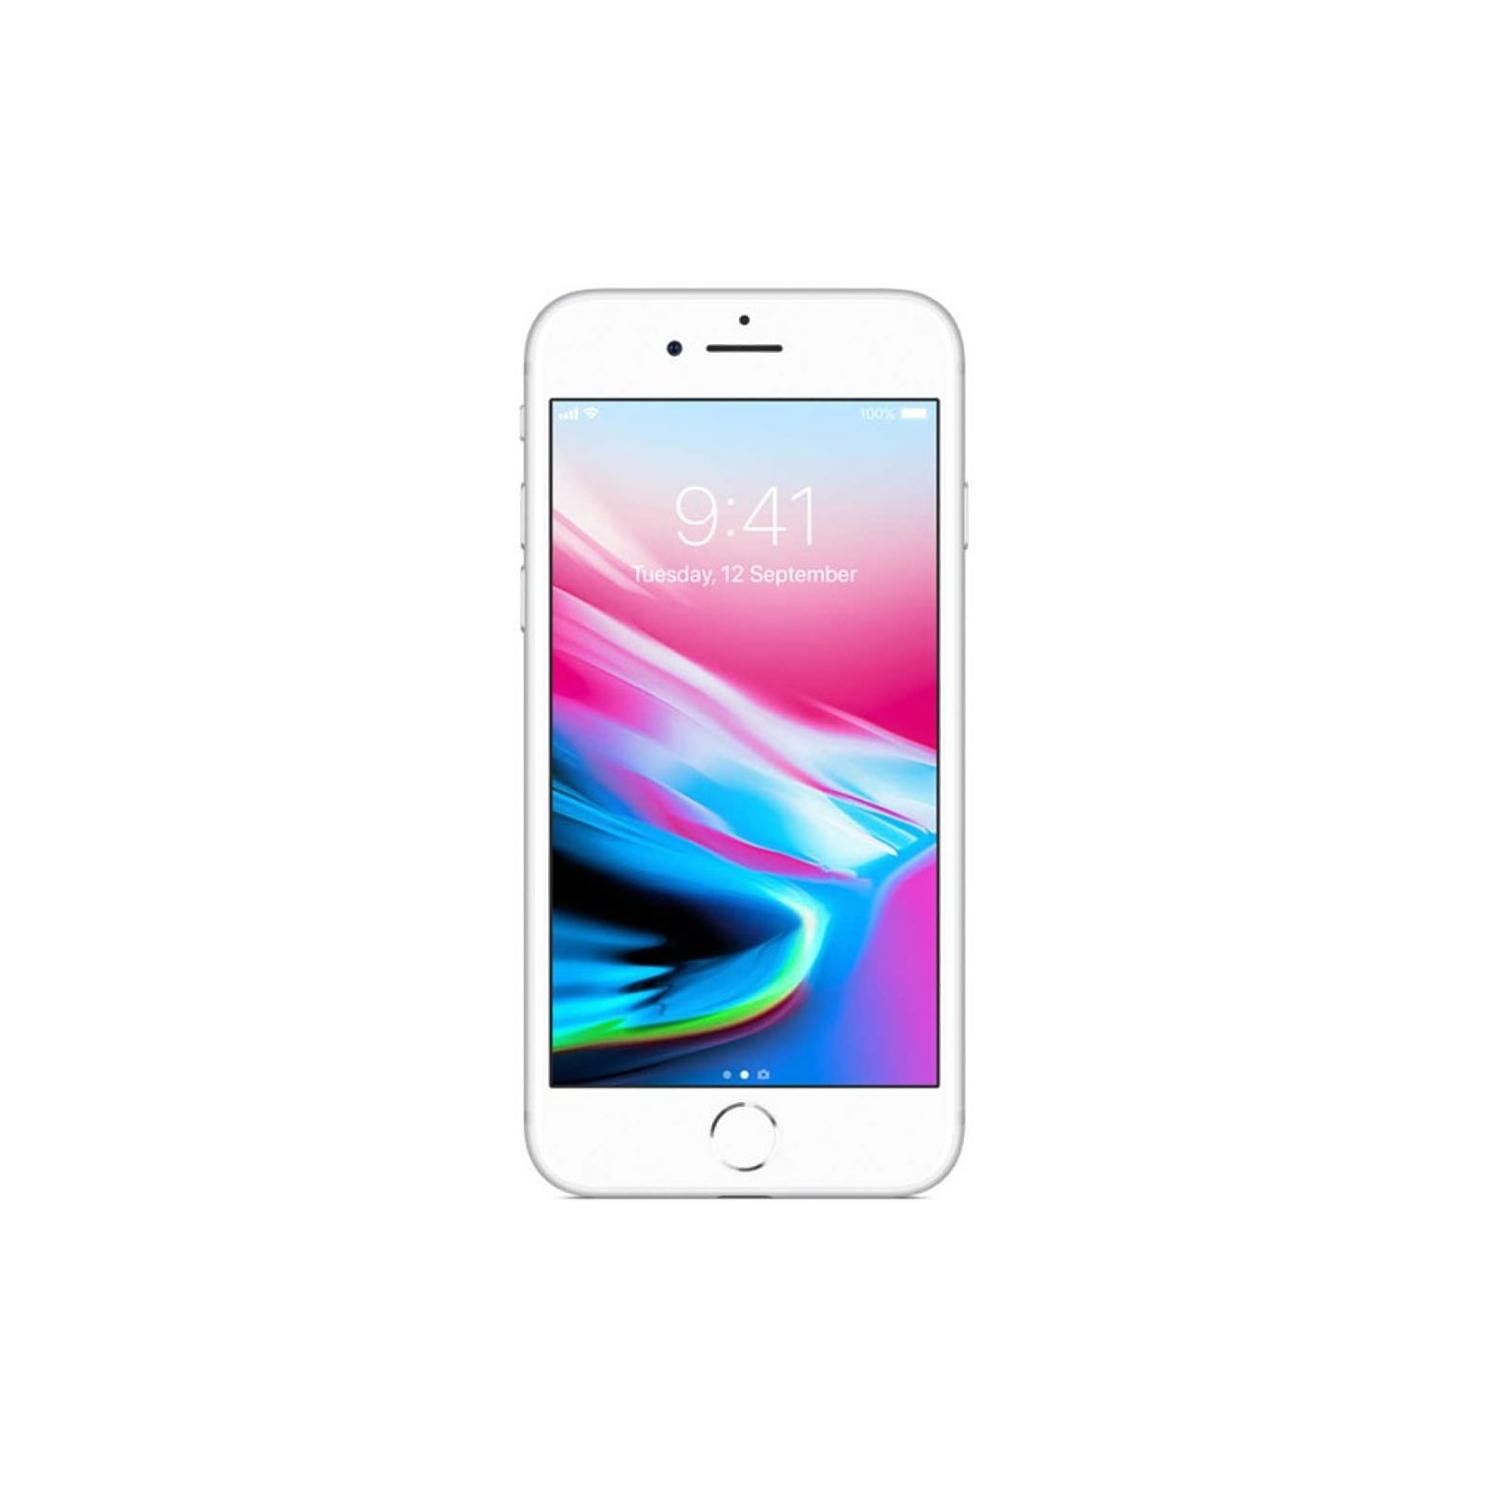 Refurbished (Excellent) - Apple iPhone 8 64GB Smartphone - Silver - Unlocked - Certified Refurbished